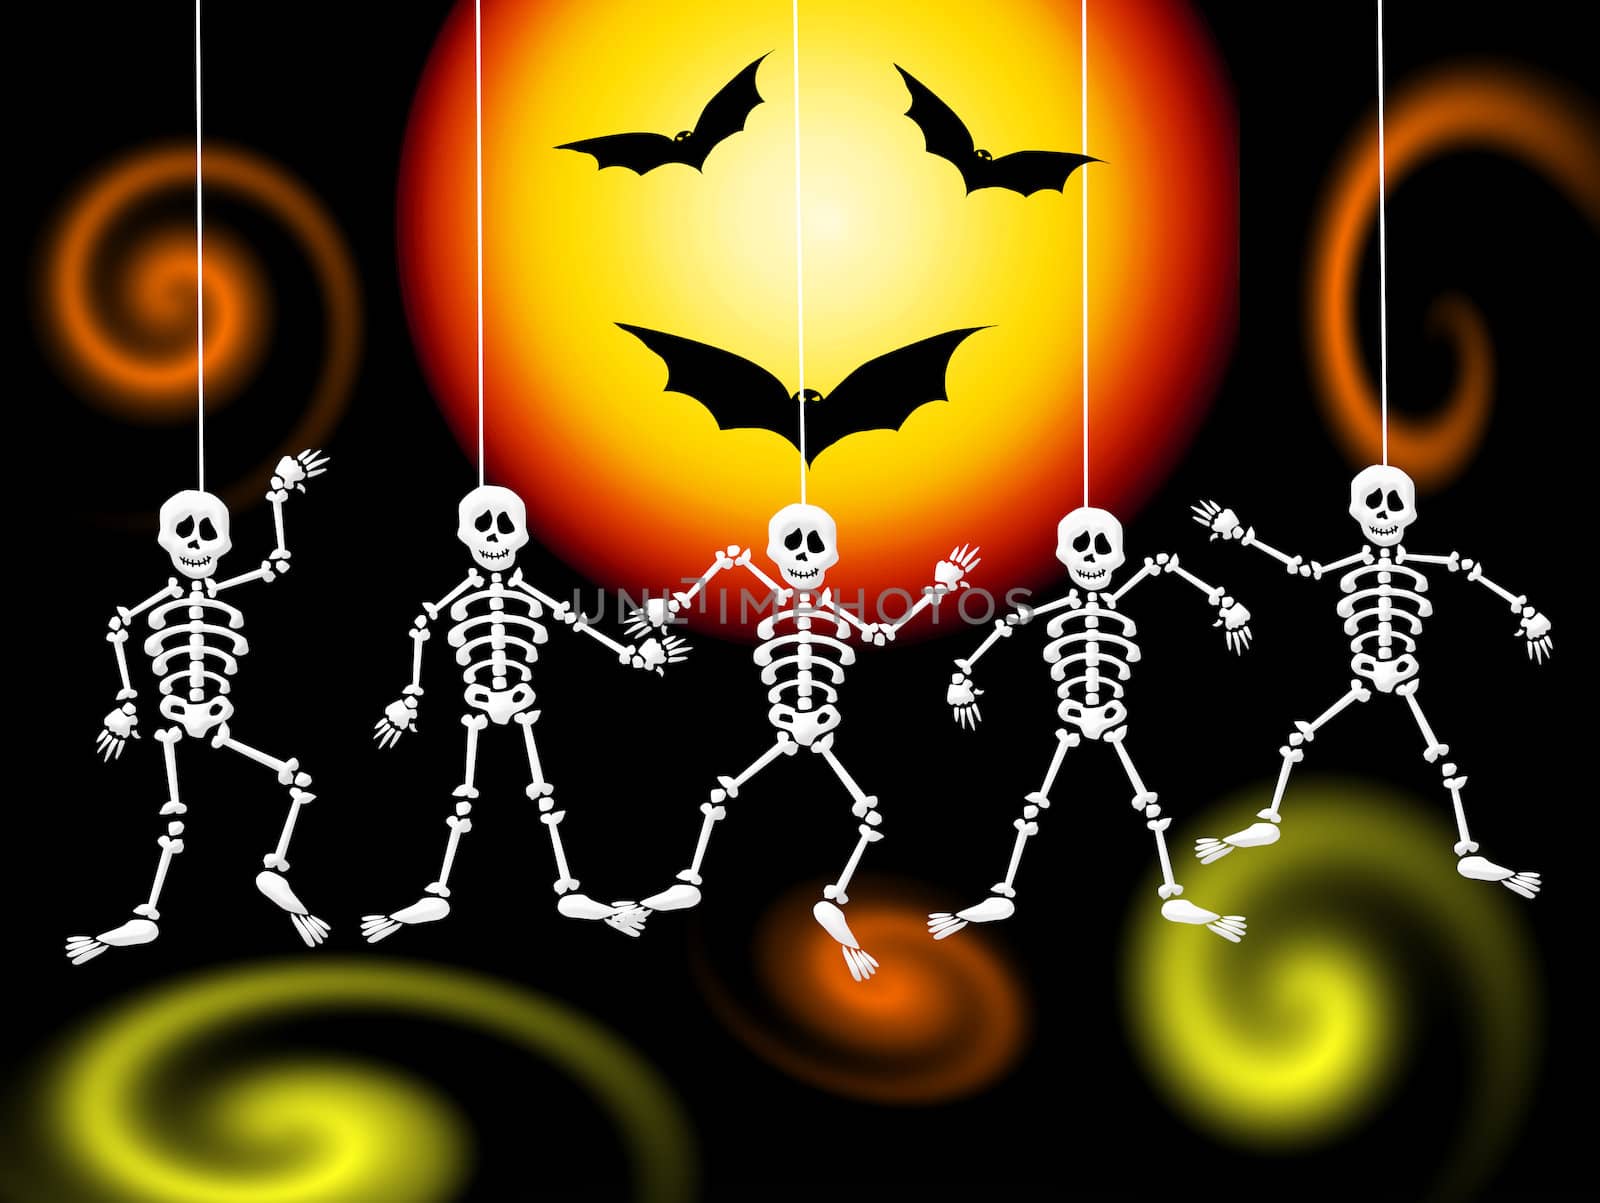 skeletons on Halloween night